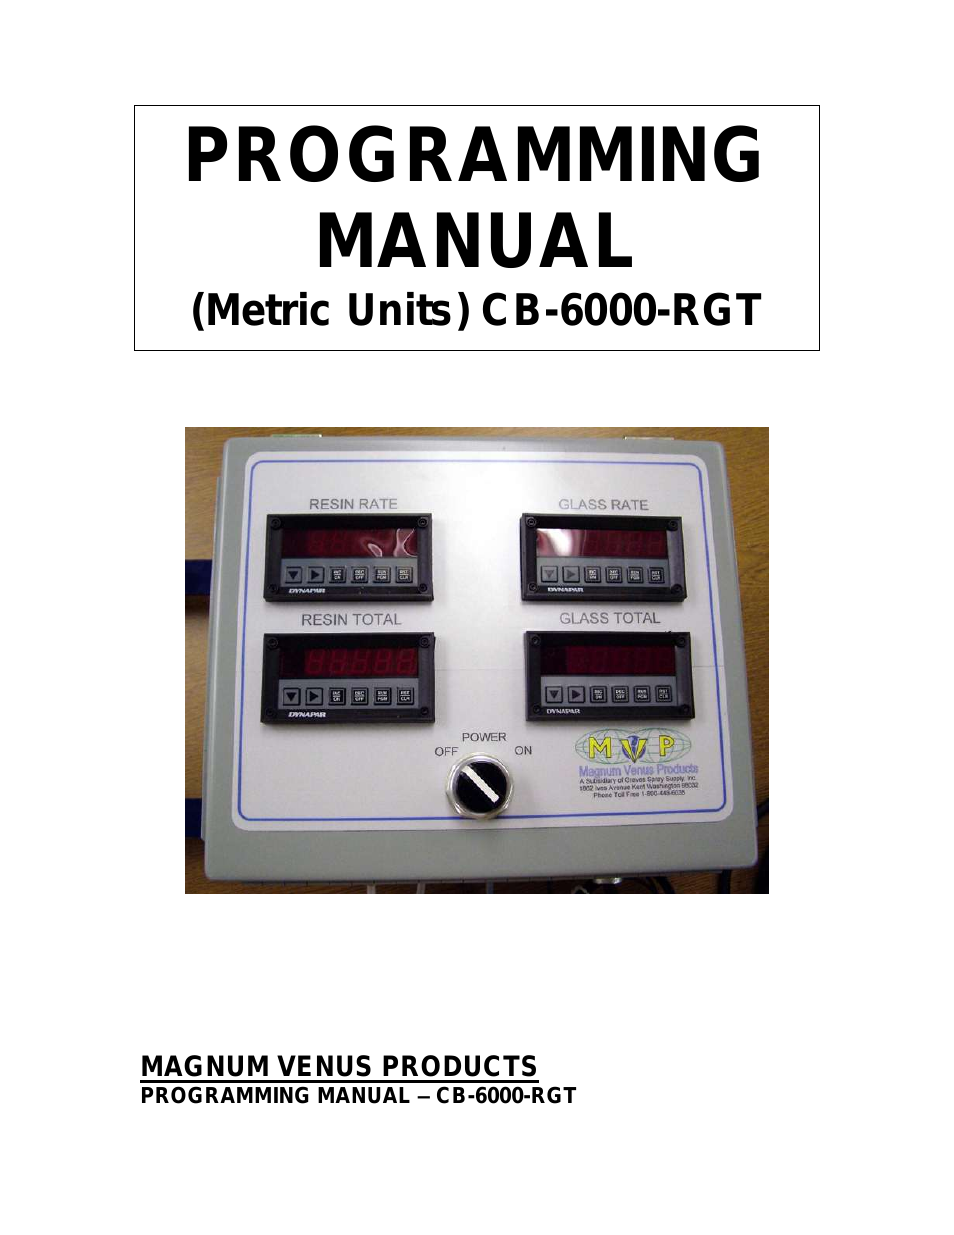 CB-6000-RGT Metric Units PROGRAMMING